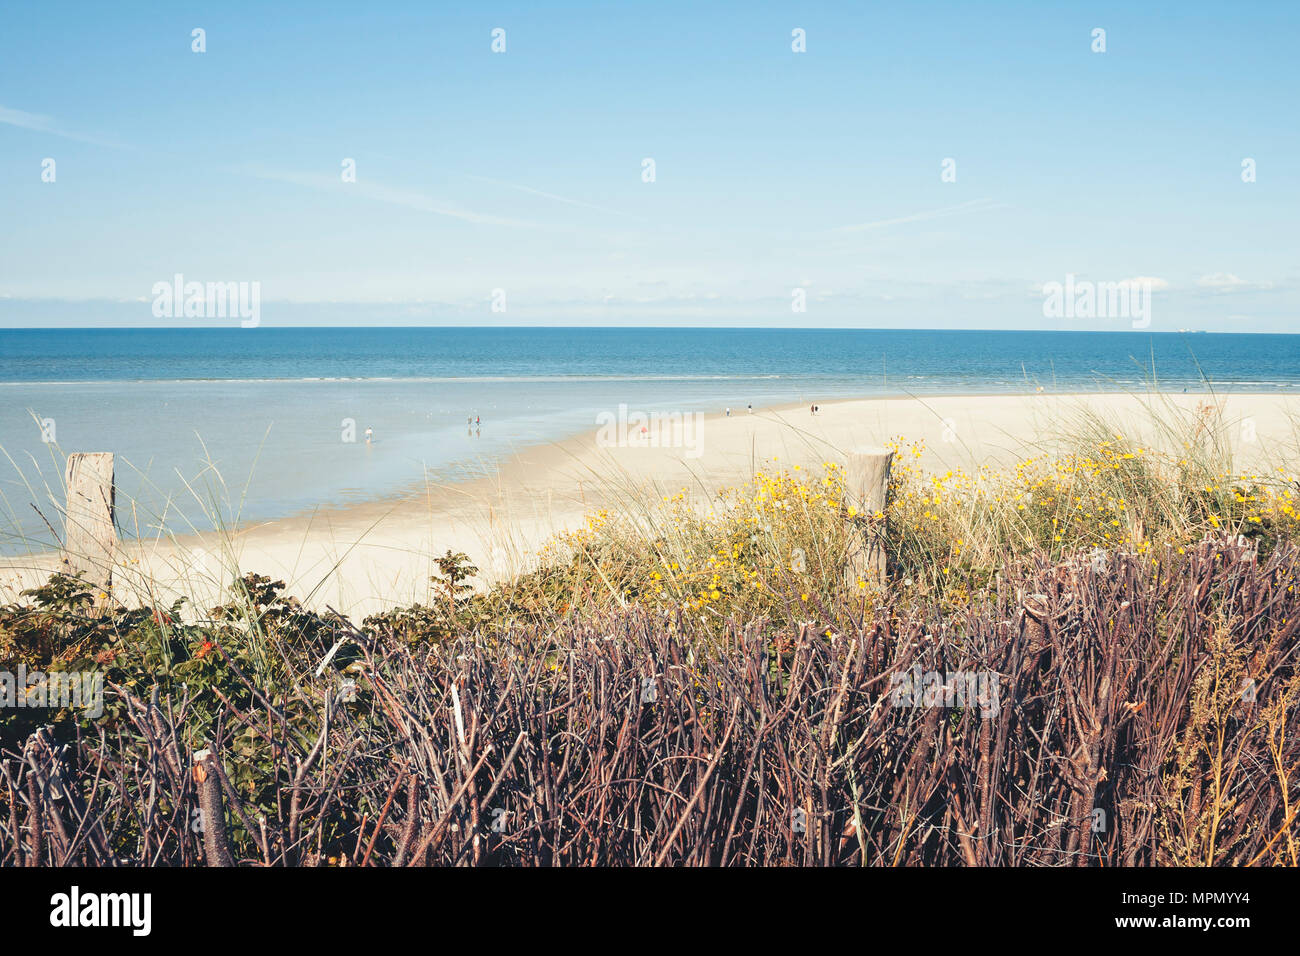 Germany, Spiekeroog, dunes and beach Stock Photo